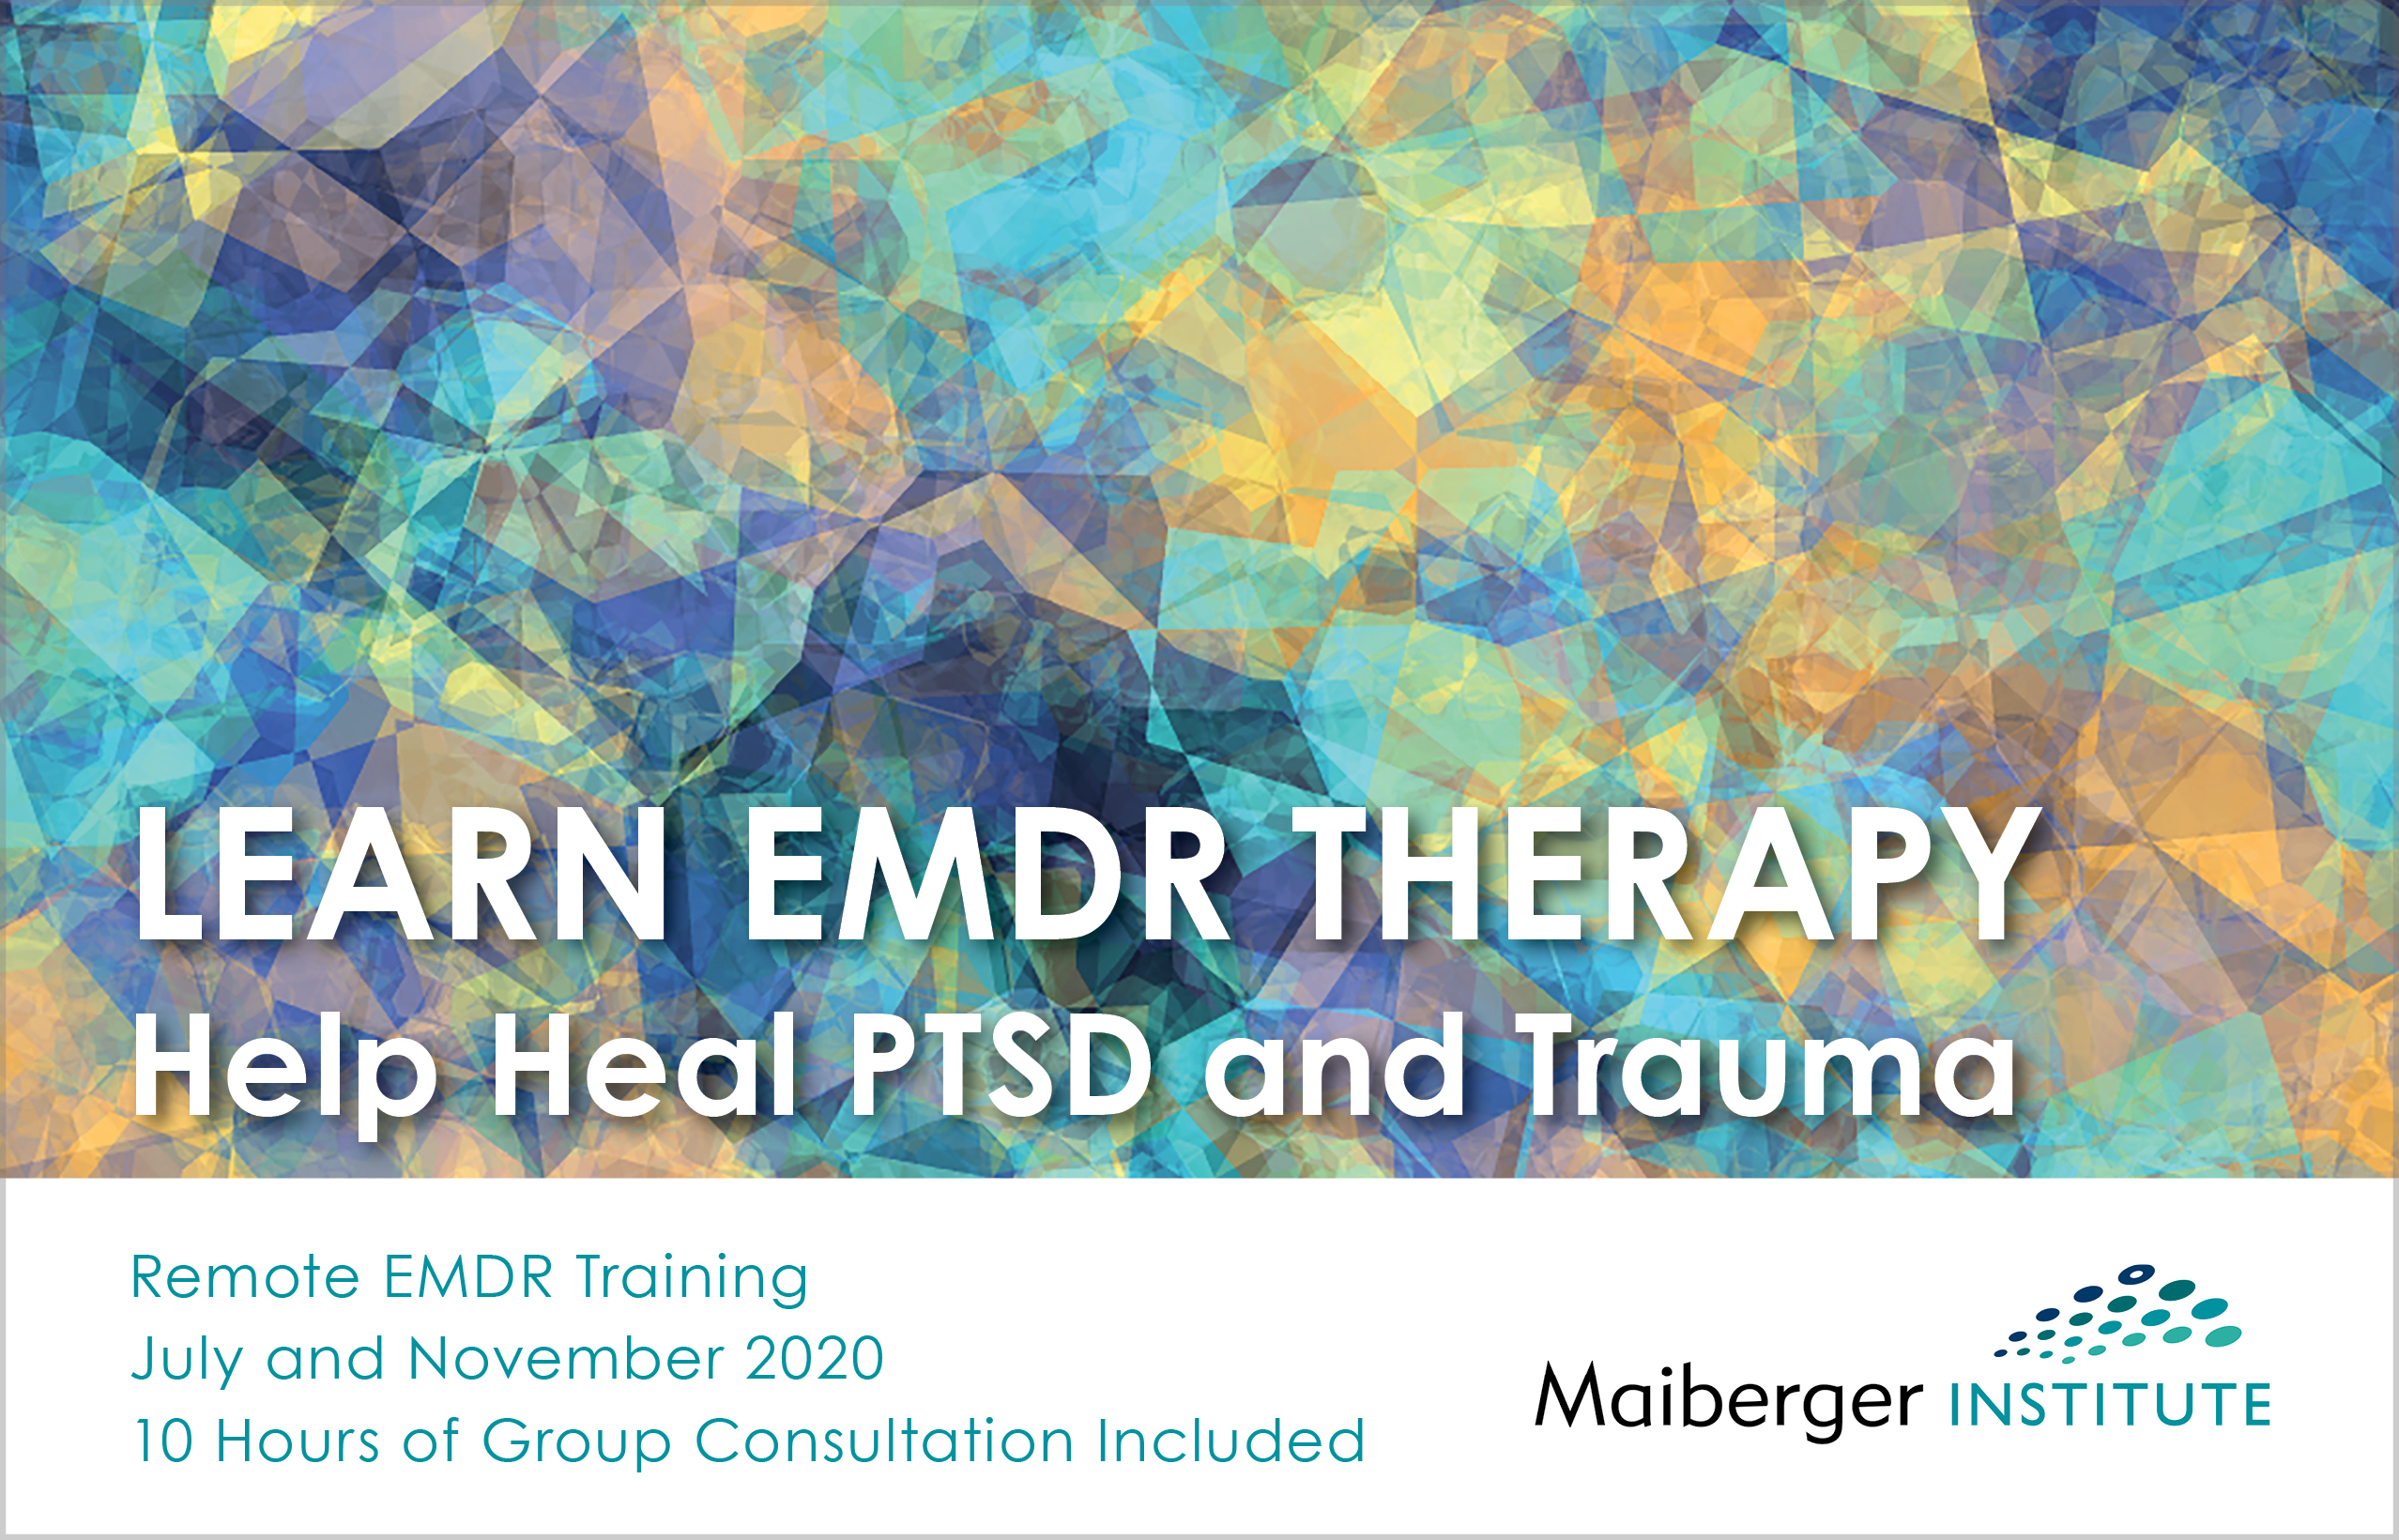 Remote EMDR Training - July and November 2020 - Maiberger Institute